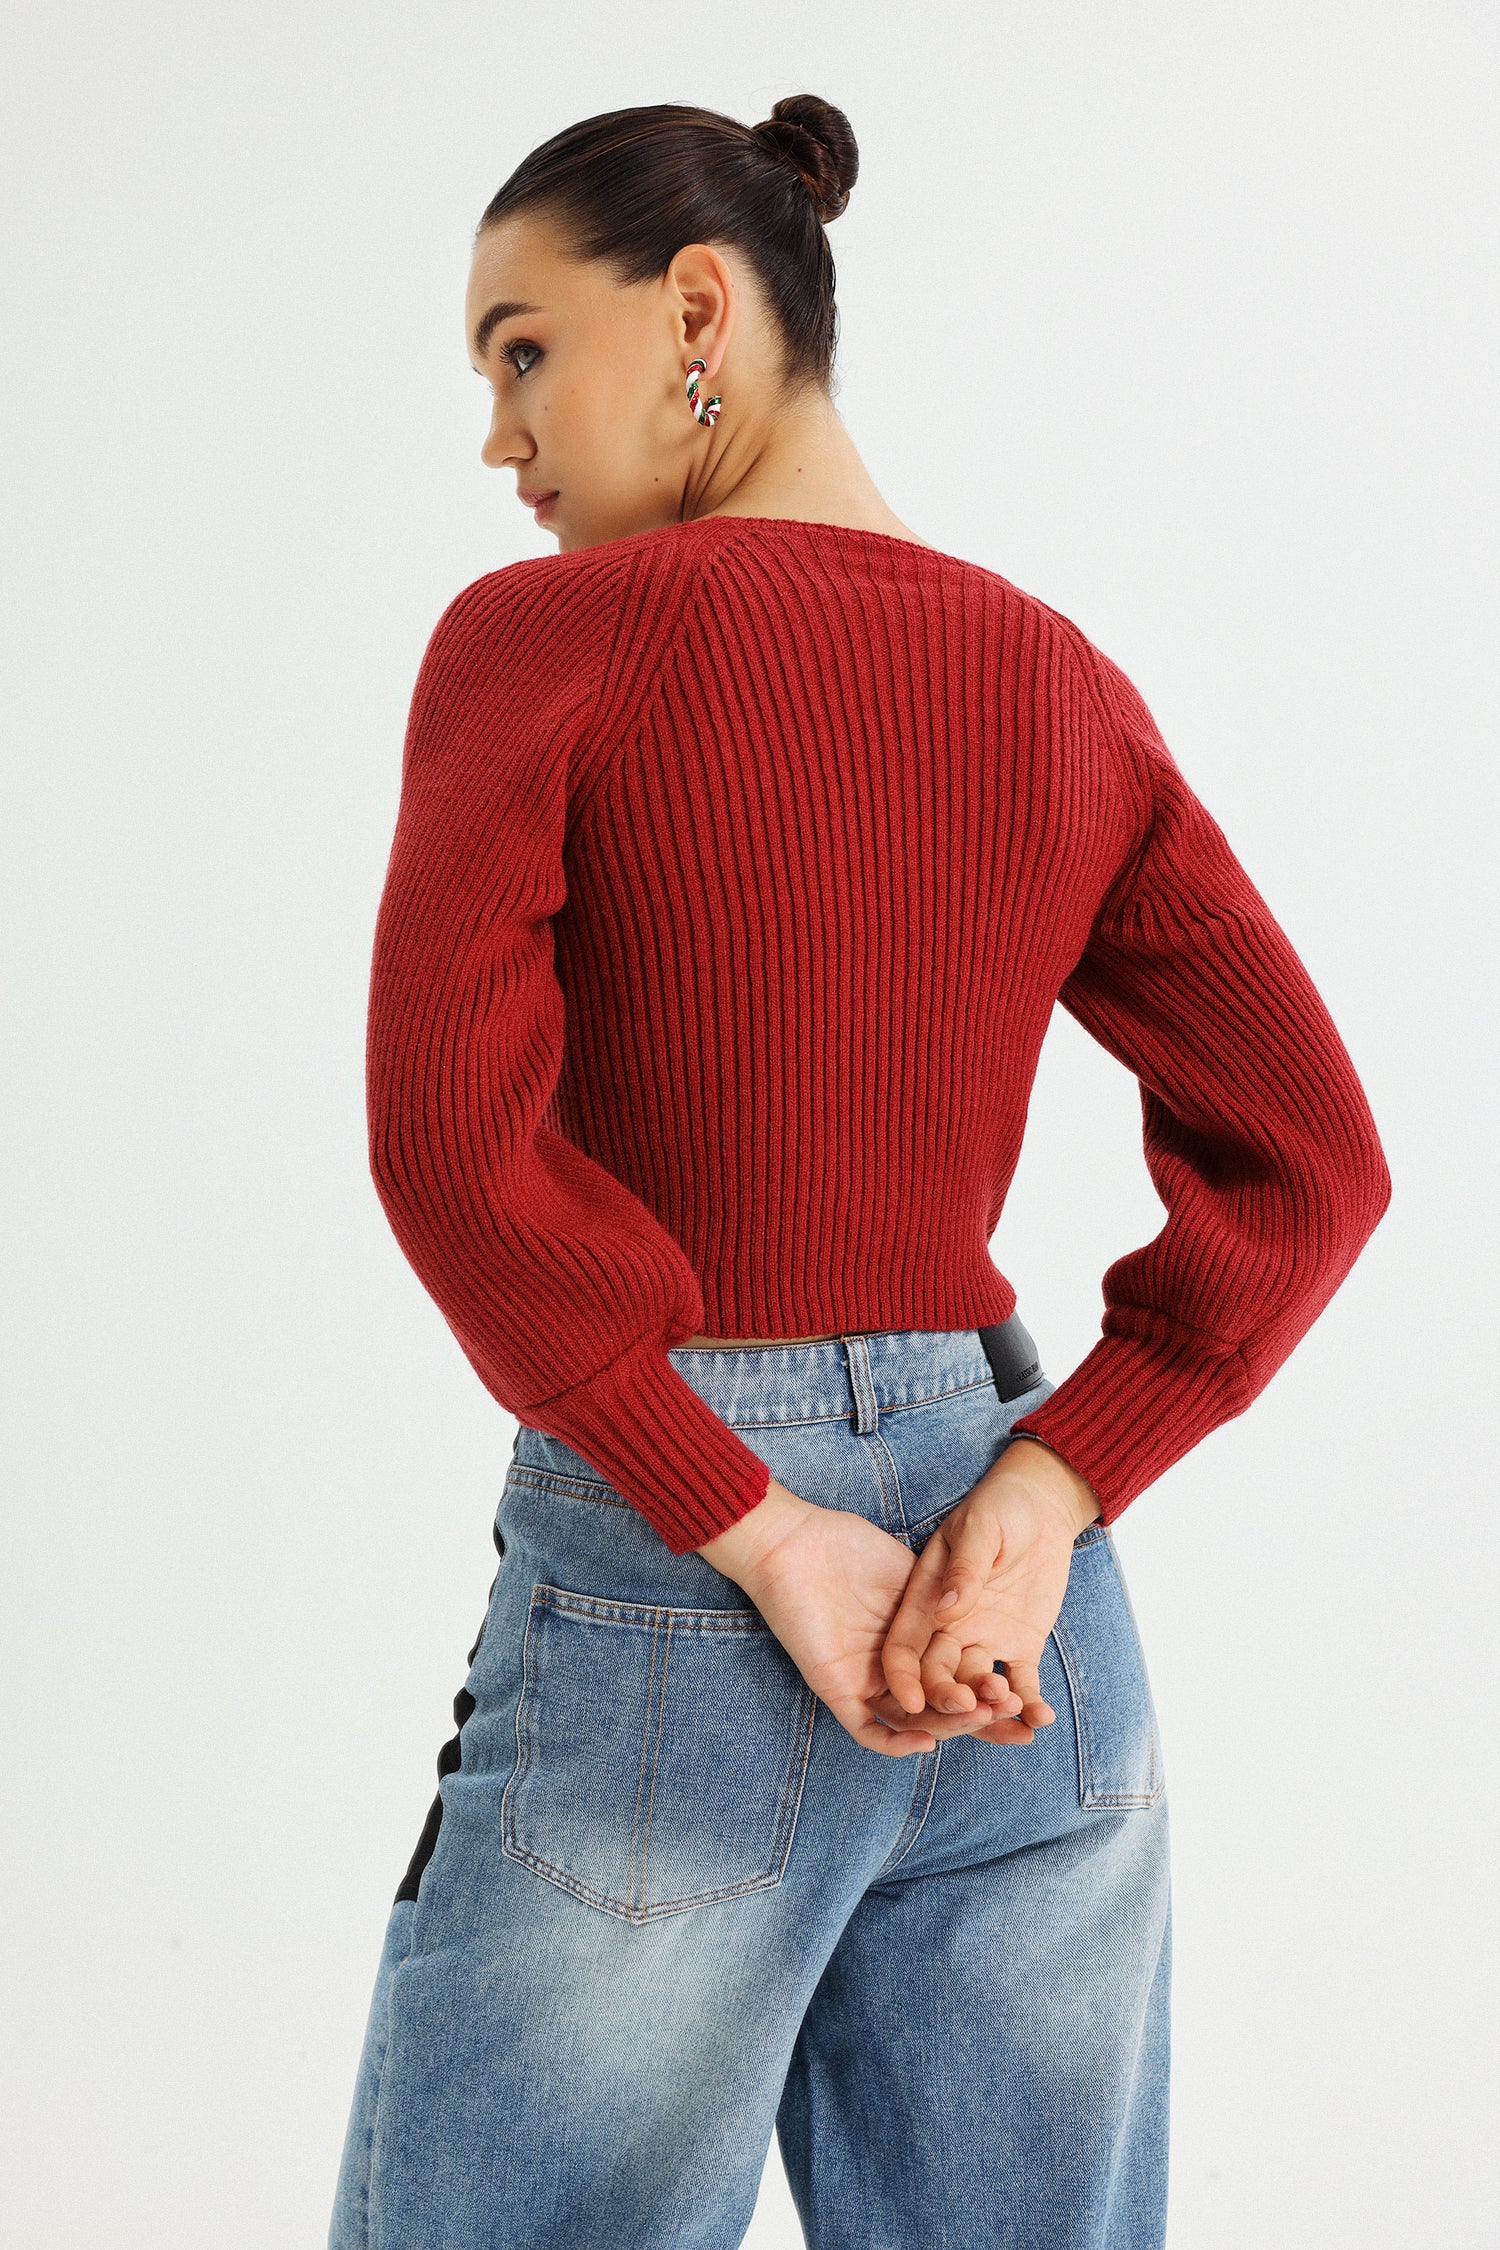 Pale Square-Cut Collar Sweater